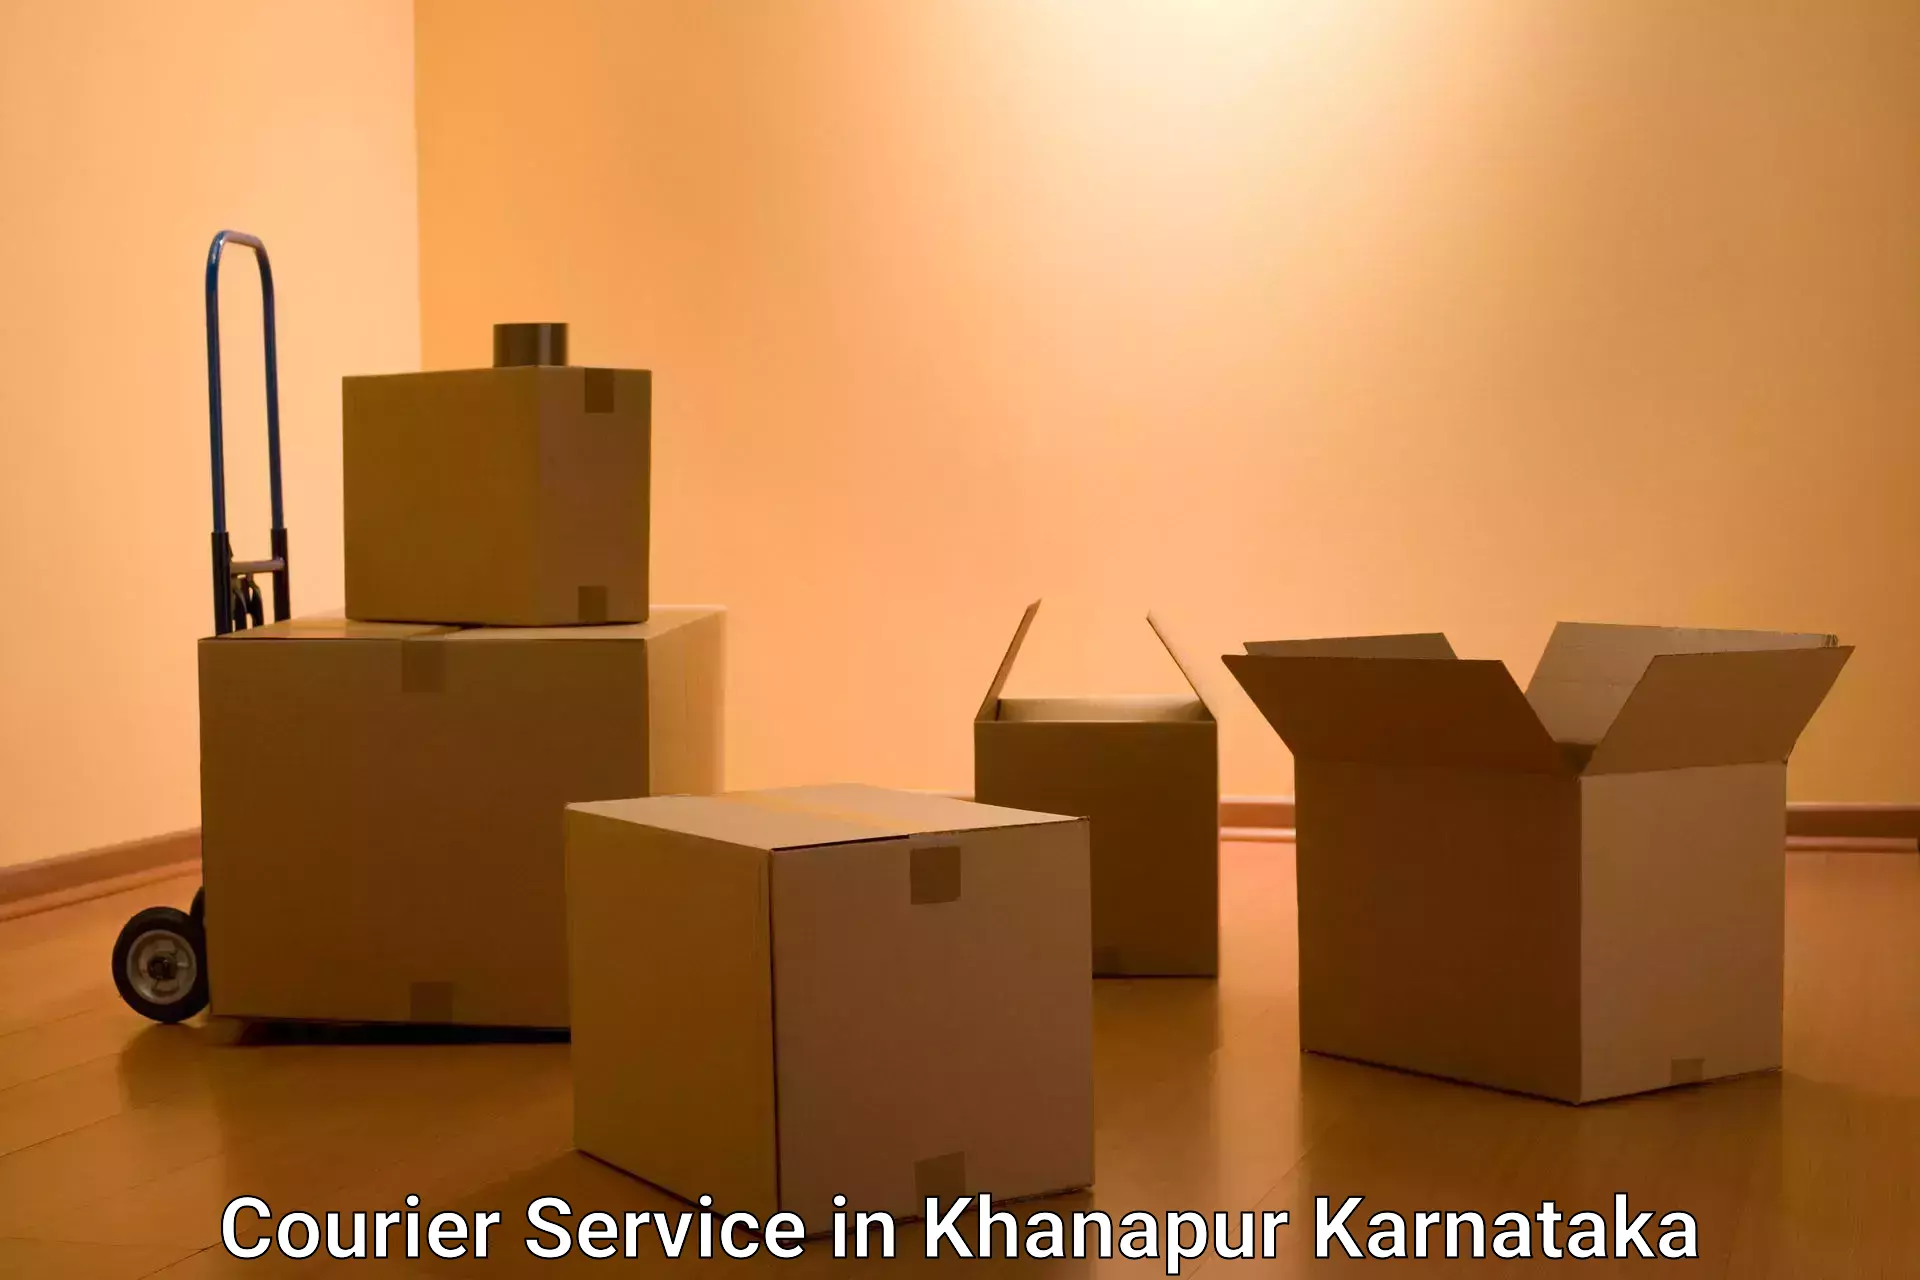 Easy return solutions in Khanapur Karnataka